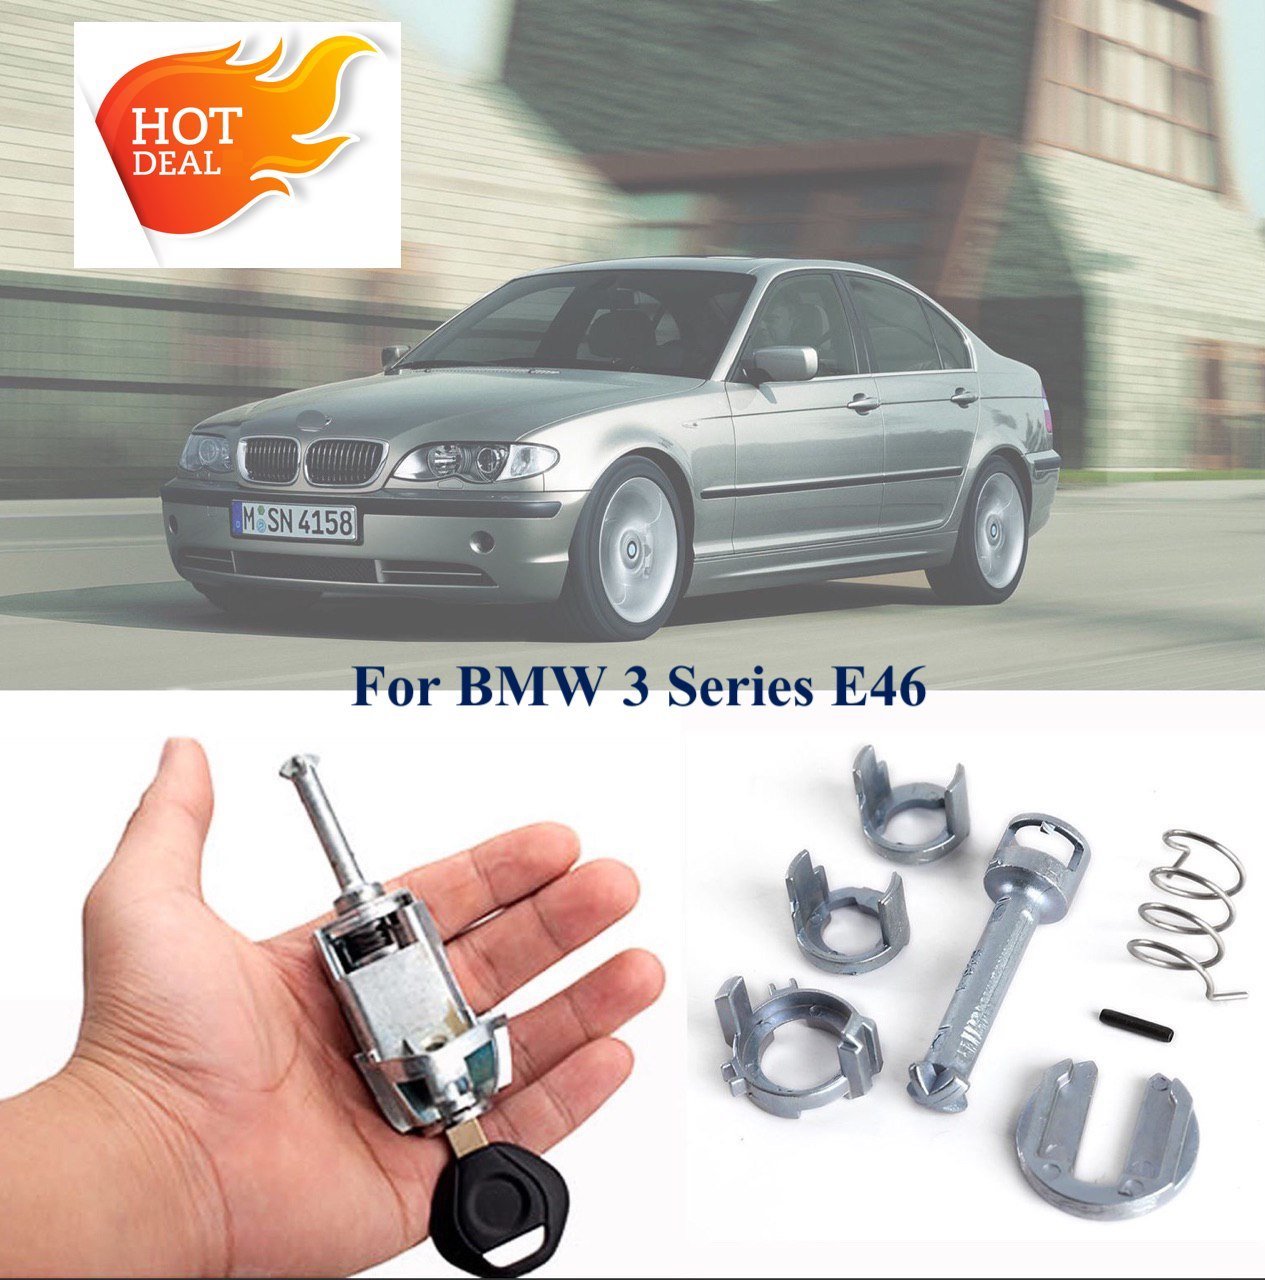 Suitable for Bmw E46 Door Lock Repair Kit Fit BMW E46 3 Series